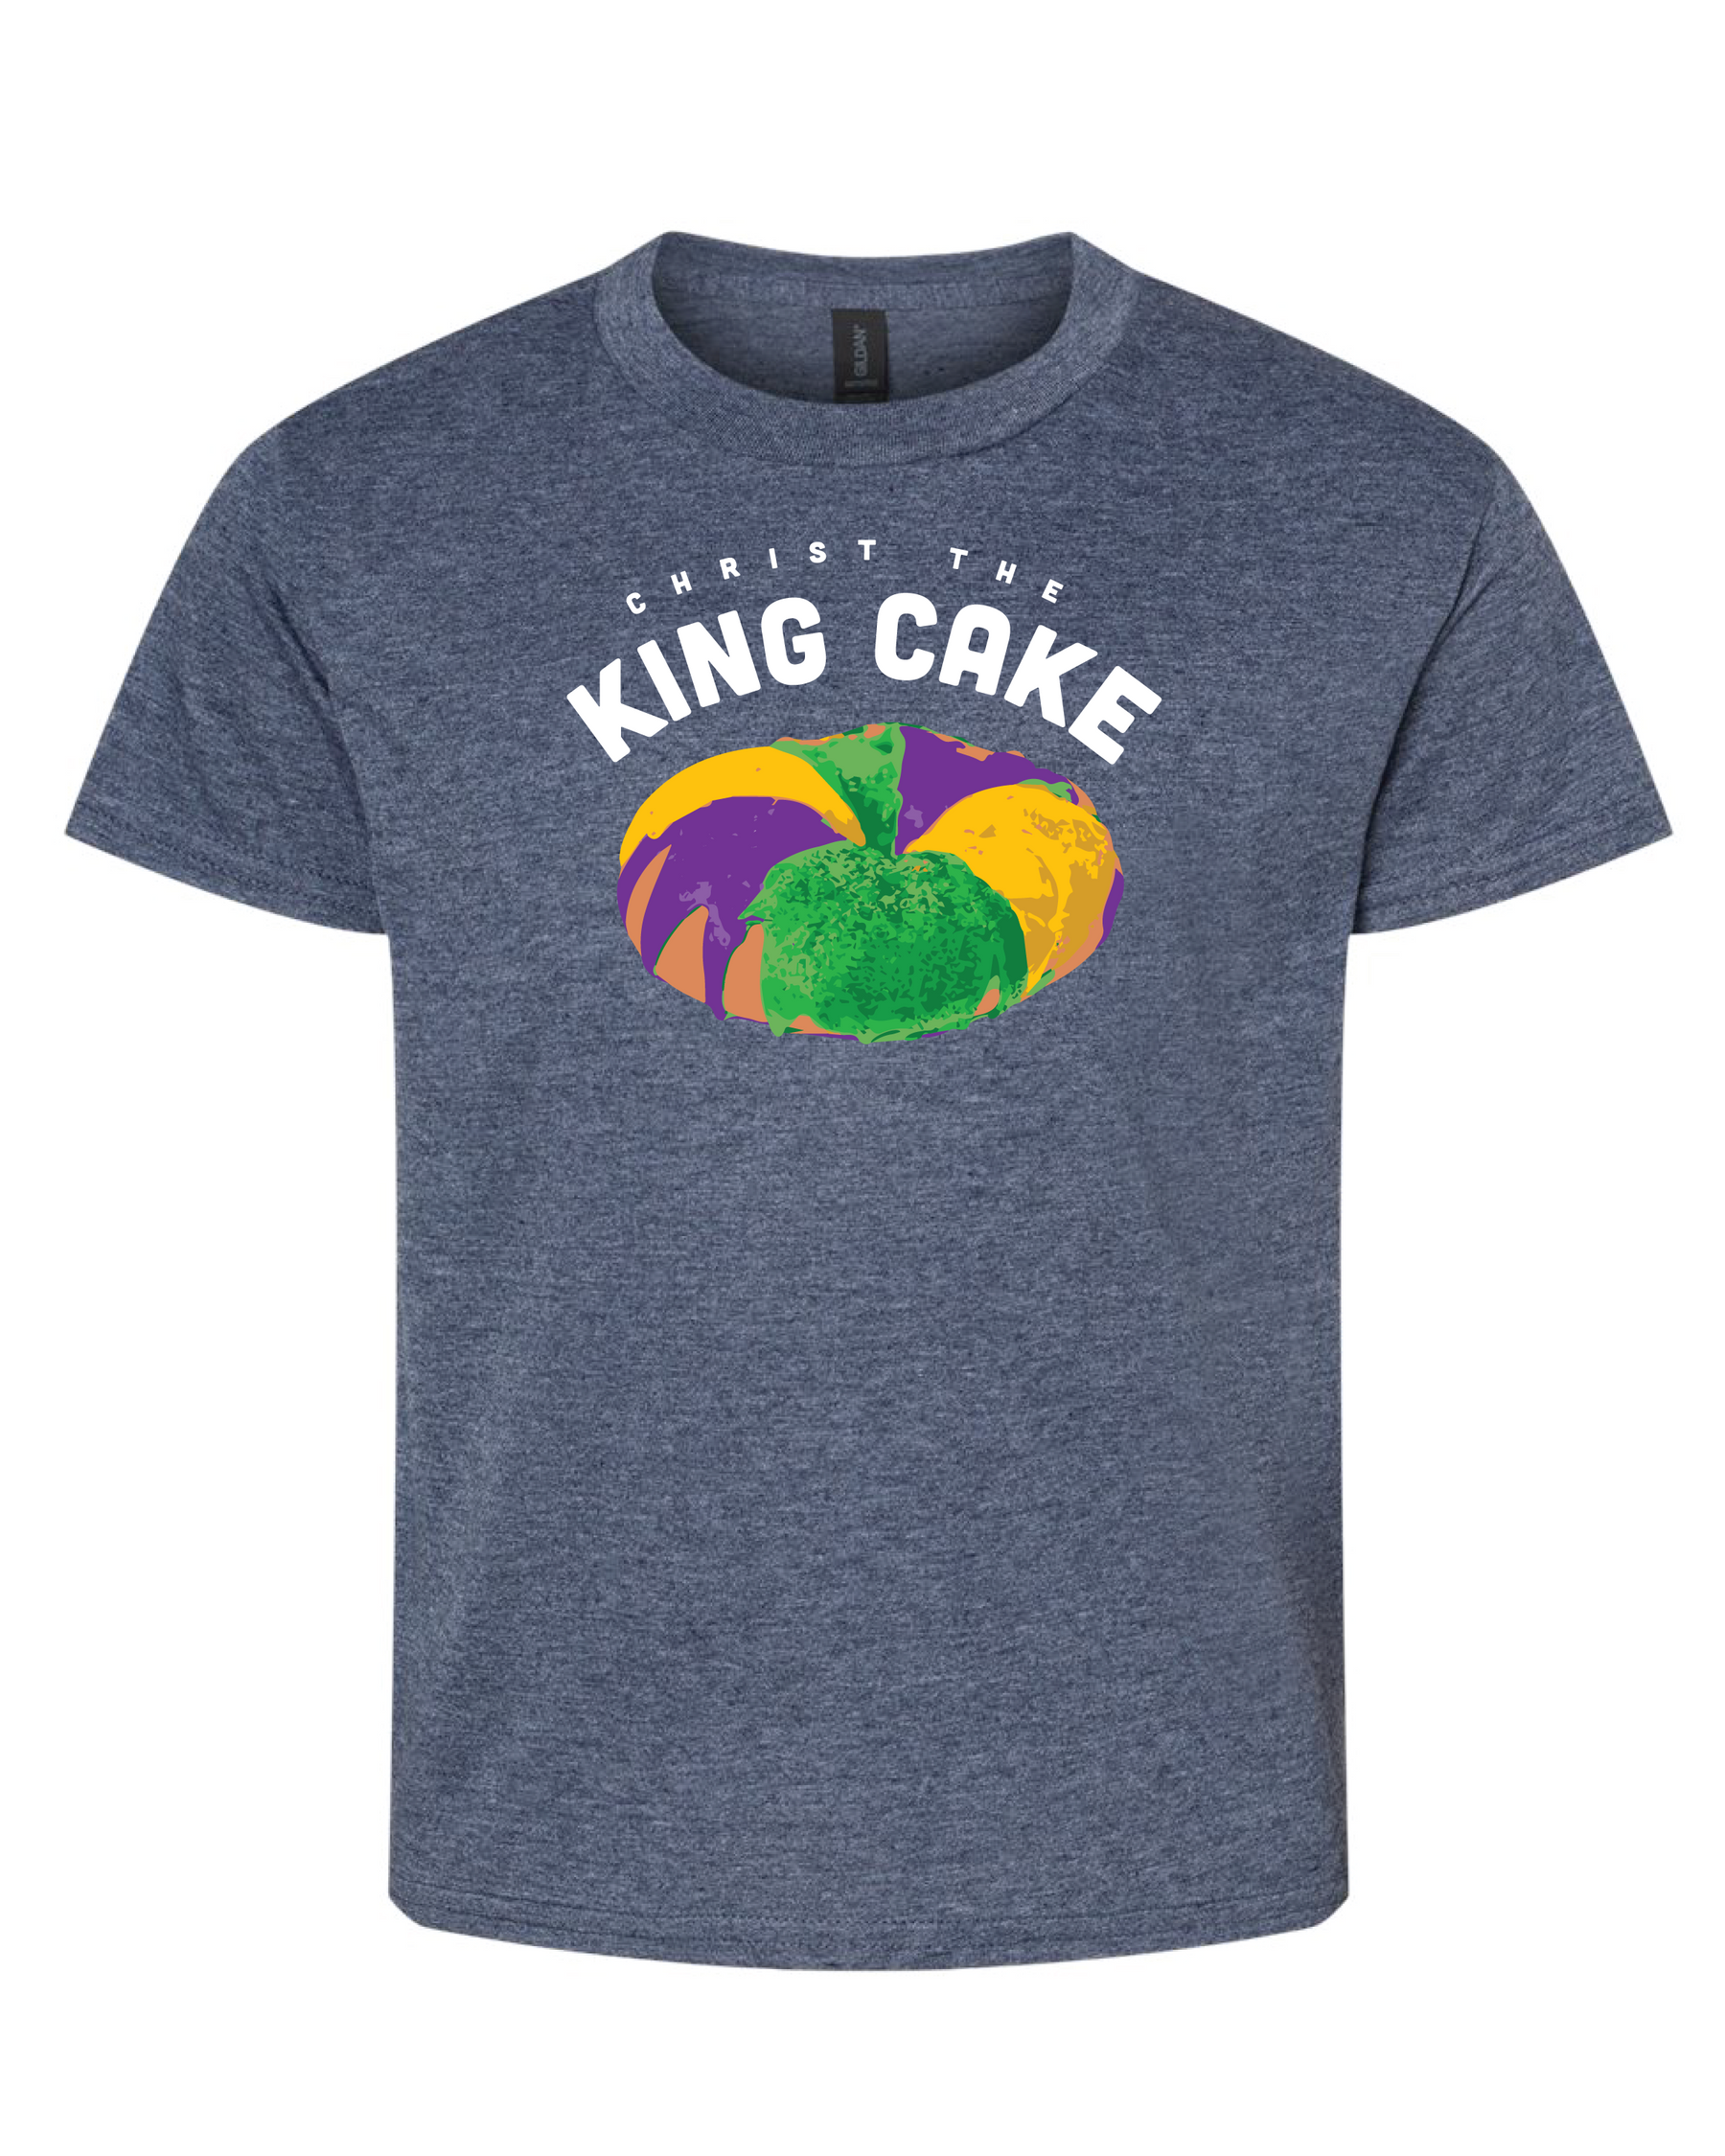 Christ the King Cake T Shirt